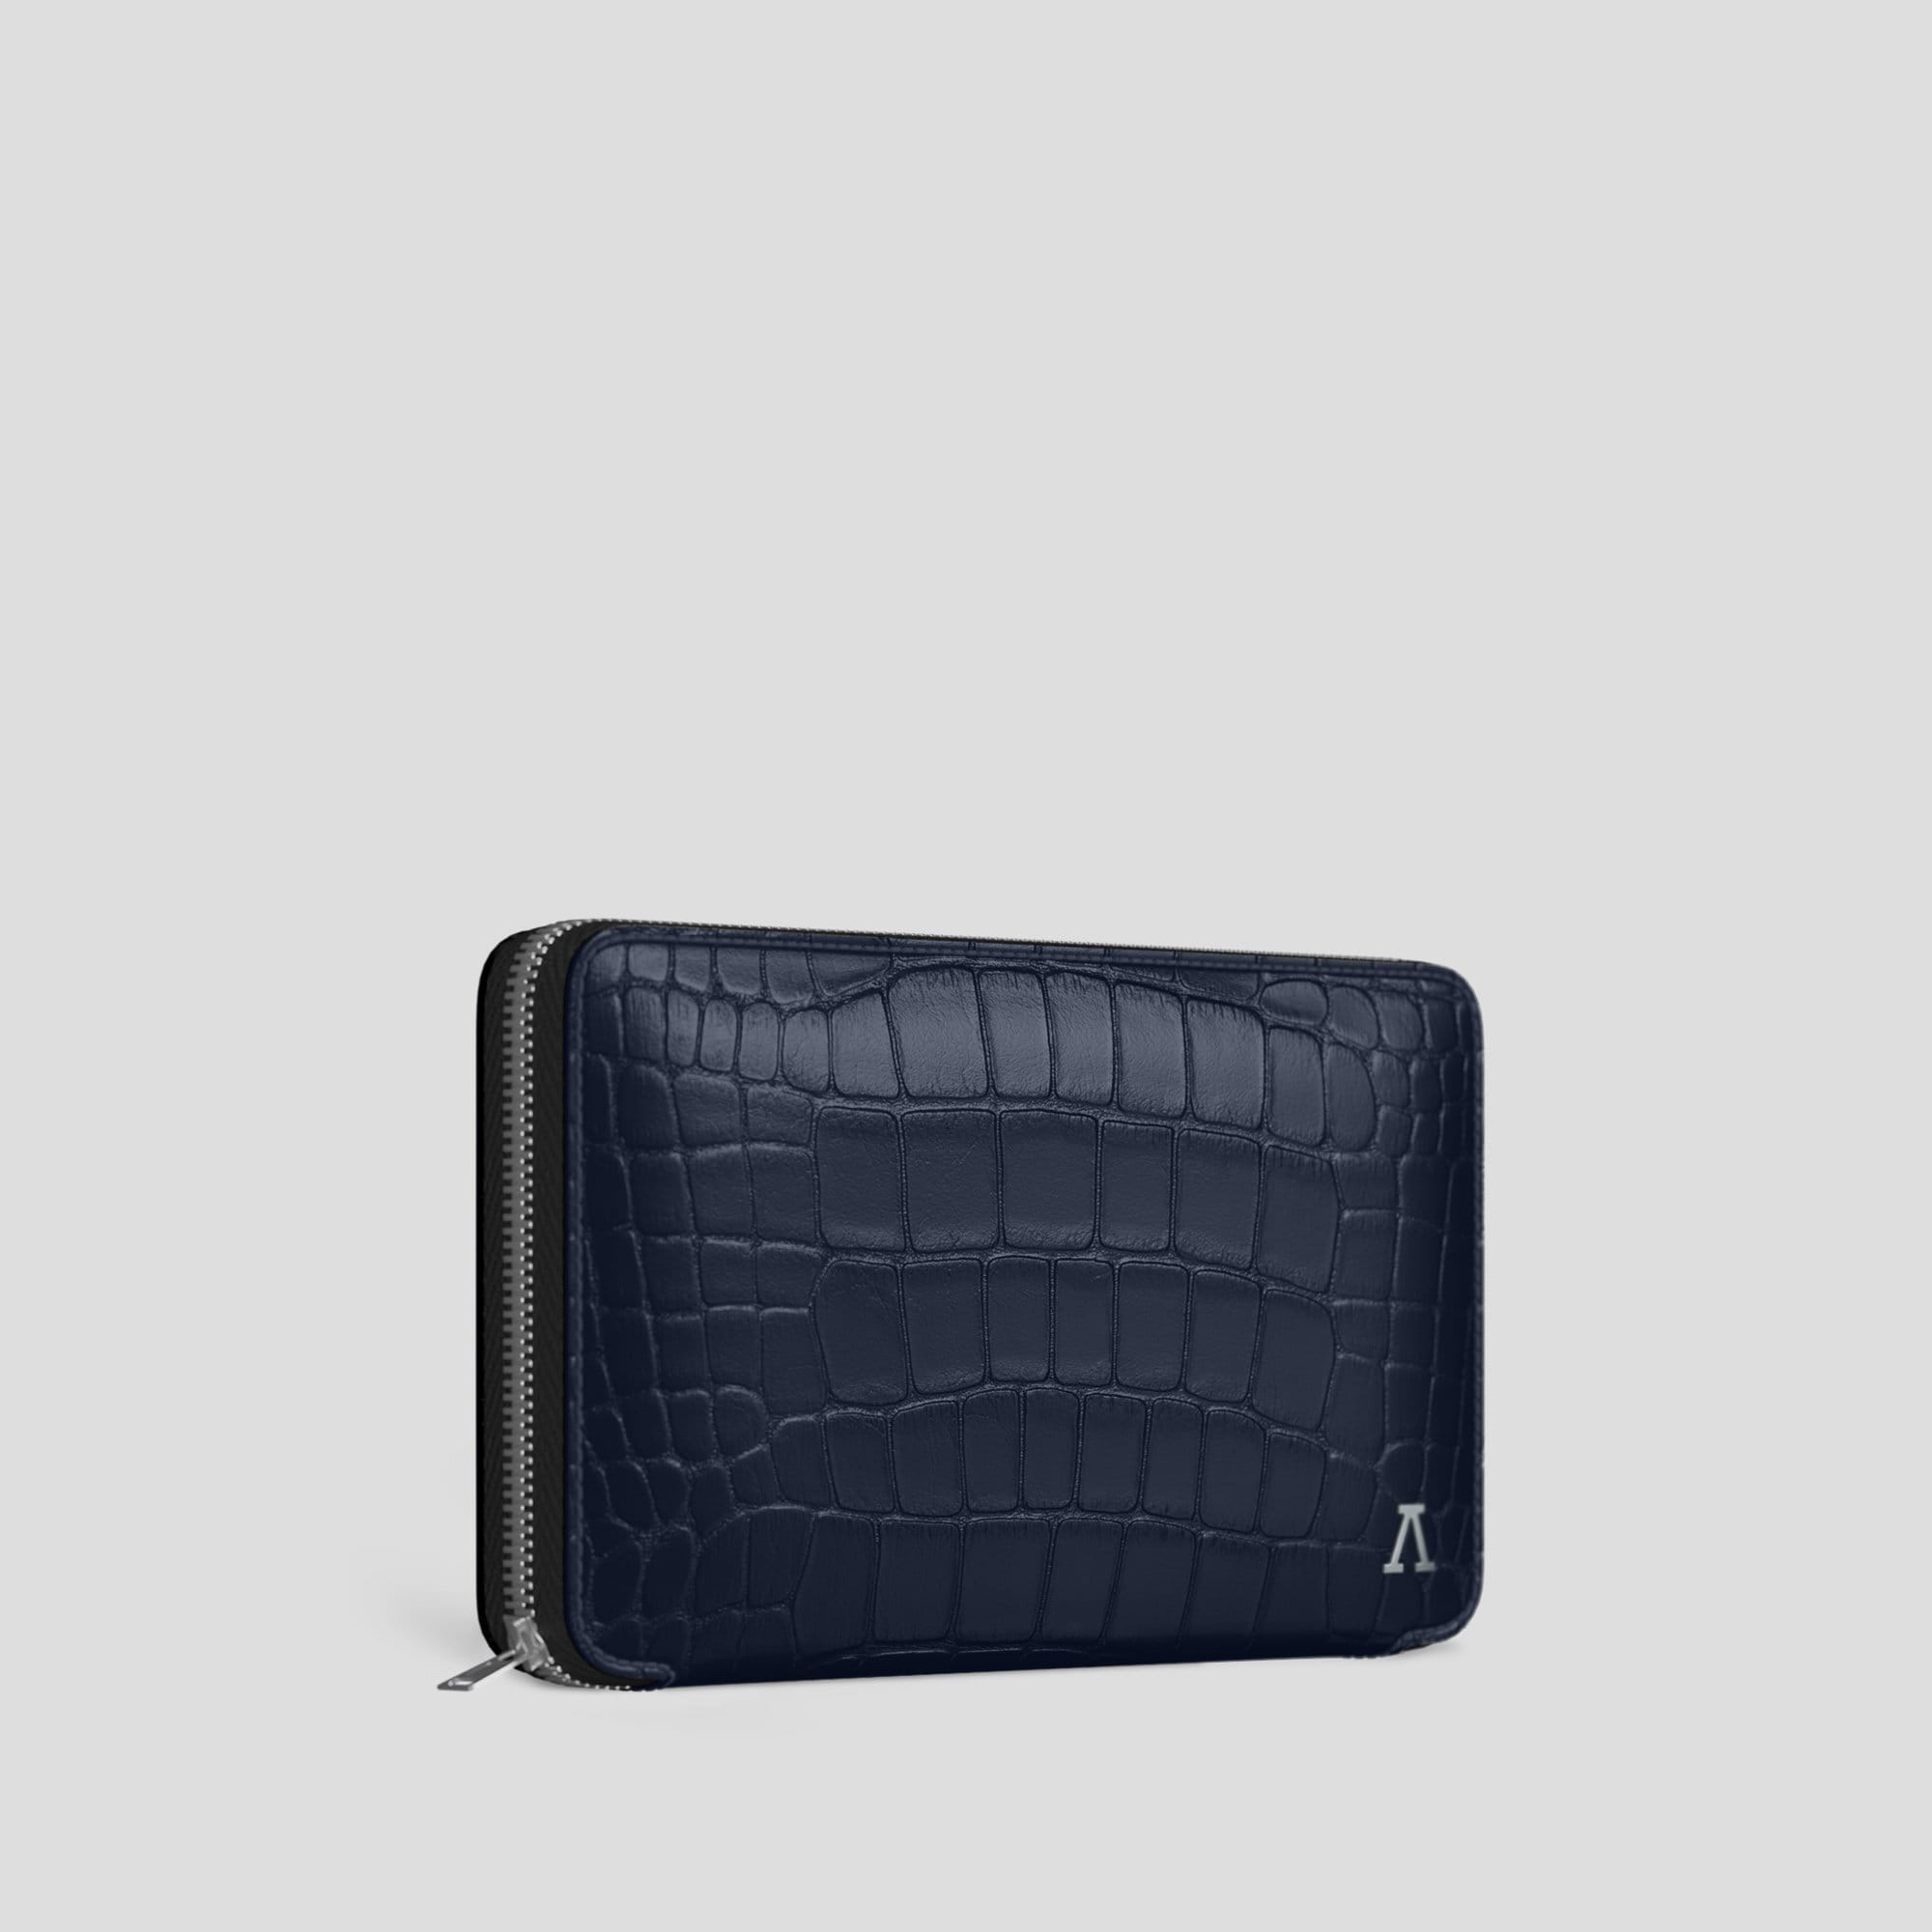 iPhone 13 Pro Max Louis Vuitton Zipper Wallet Folio Case - Luxury